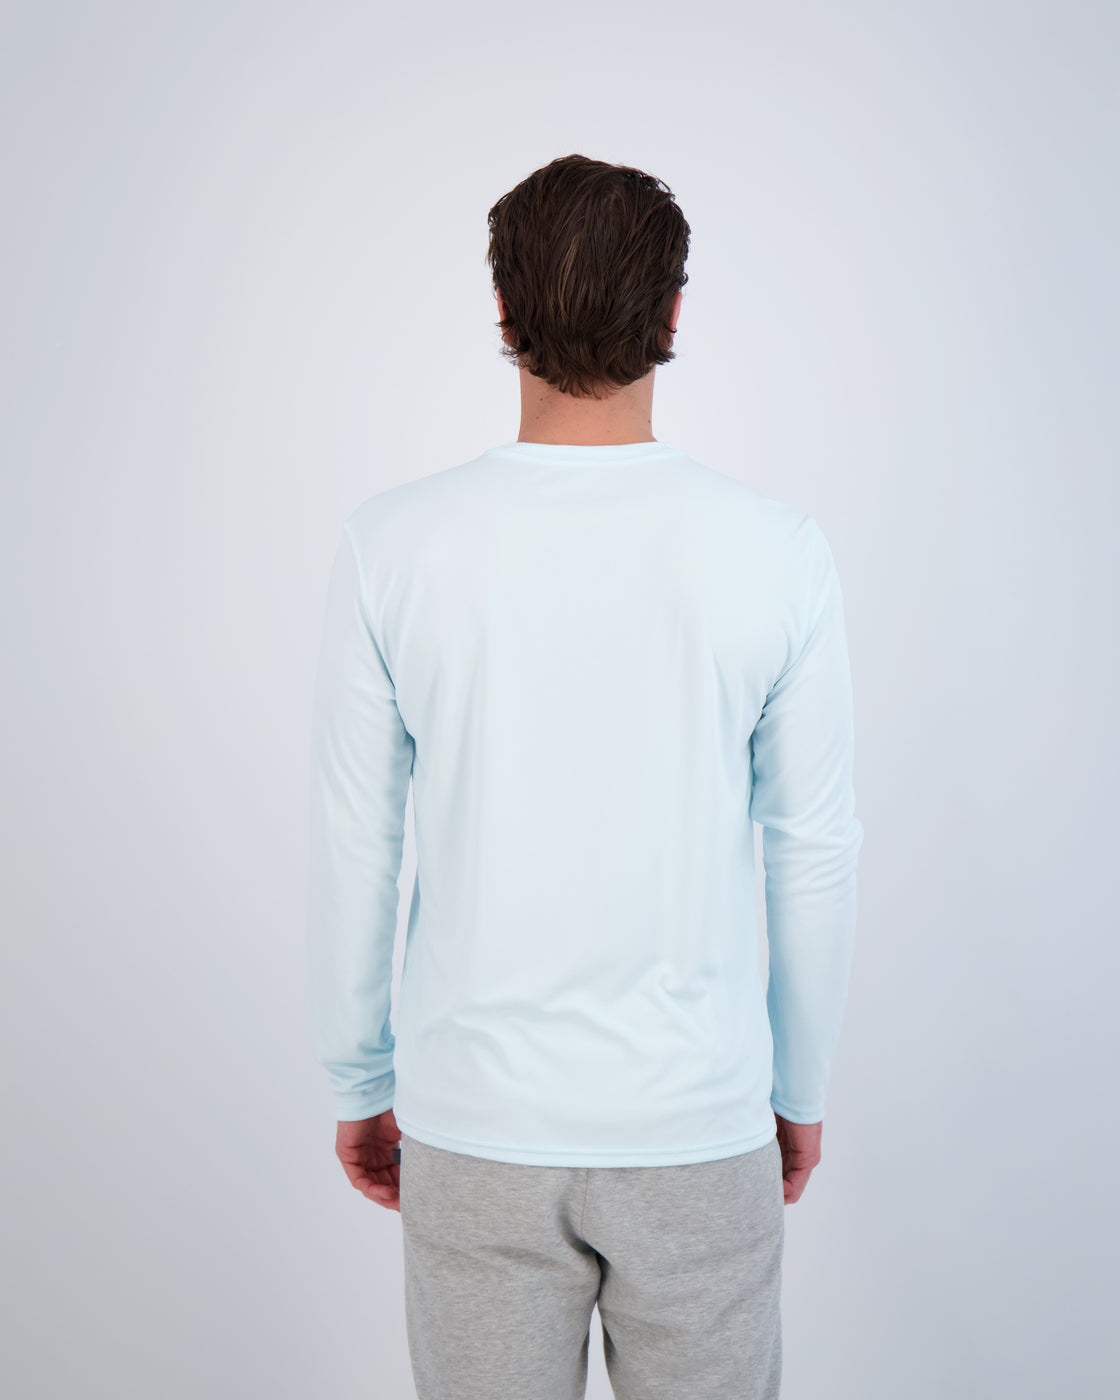 Bass - Long Sleeve ProtectUV Sun Protective Shirt 3X Large / Bliss Blue